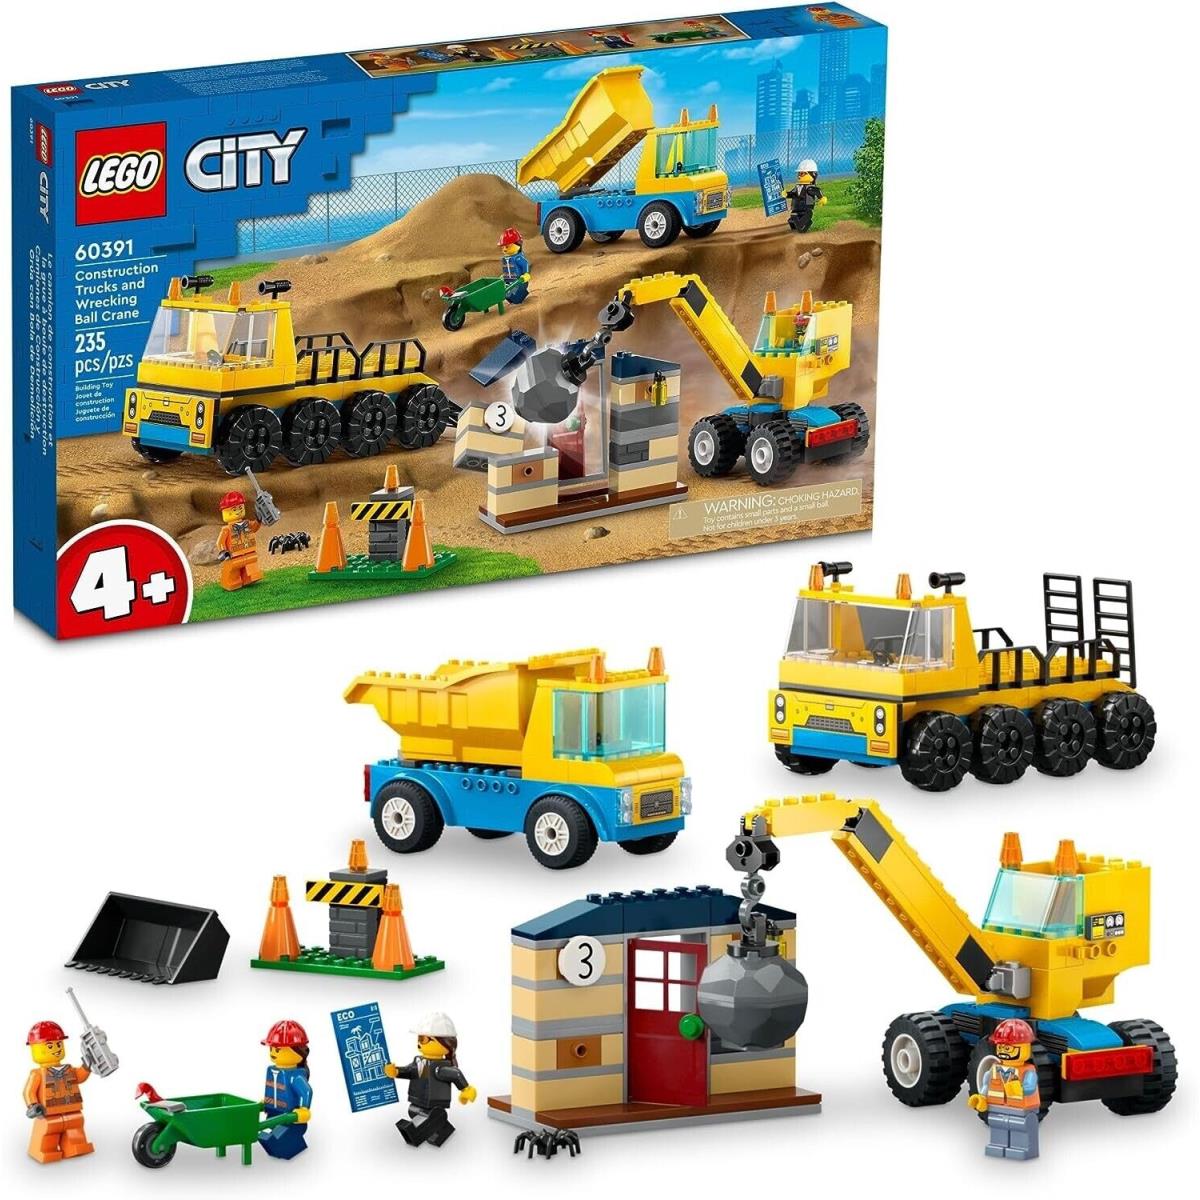 Lego City Construction Trucks Wrecking Ball Crane 60391 Box Not Mint E